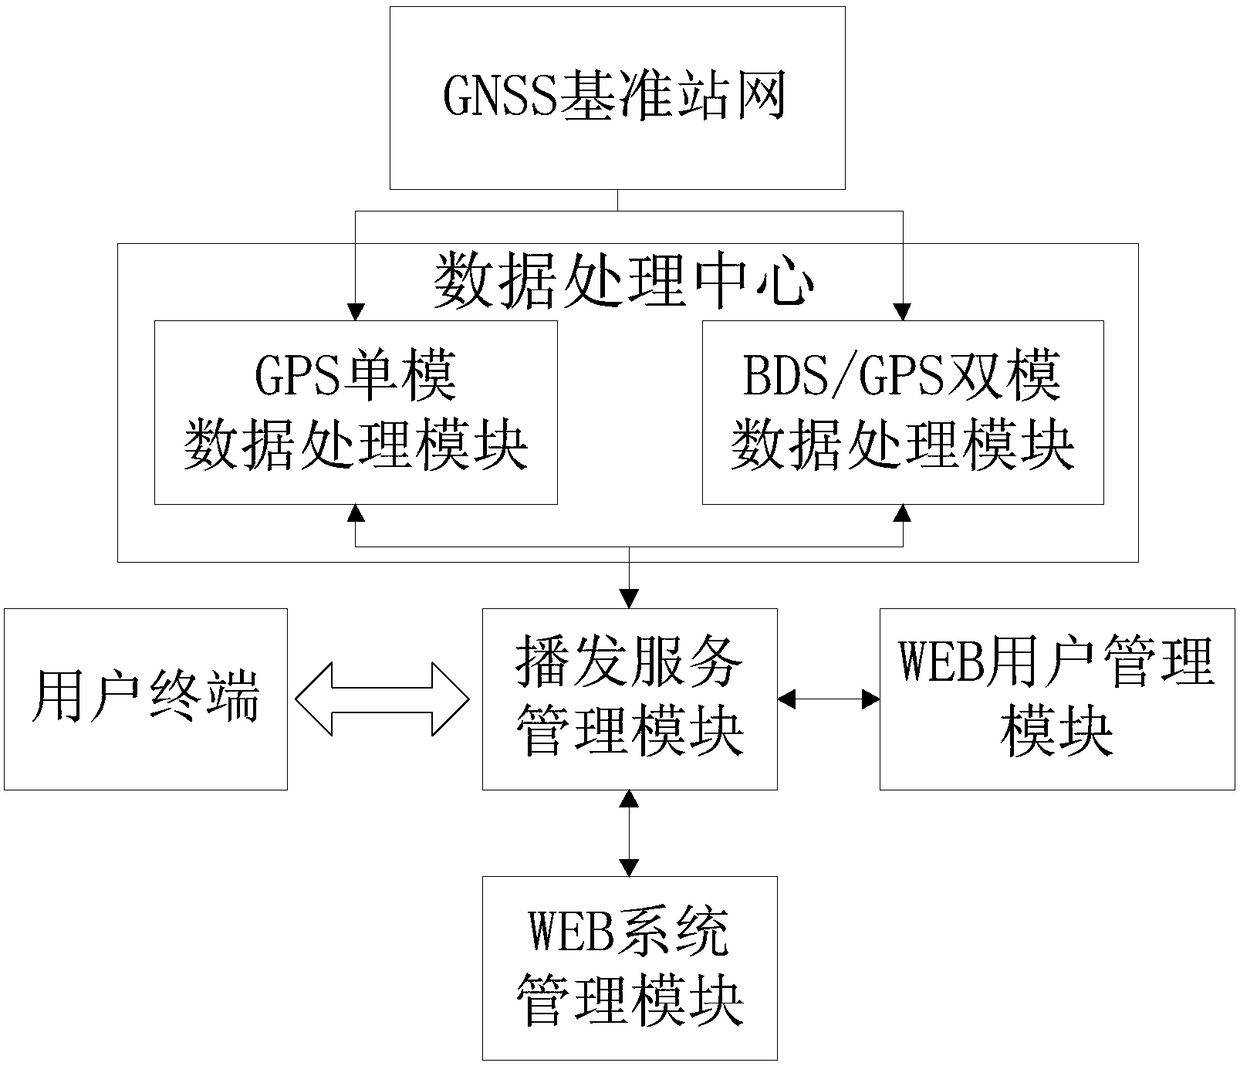 GNSS ground base station enhancement service management system